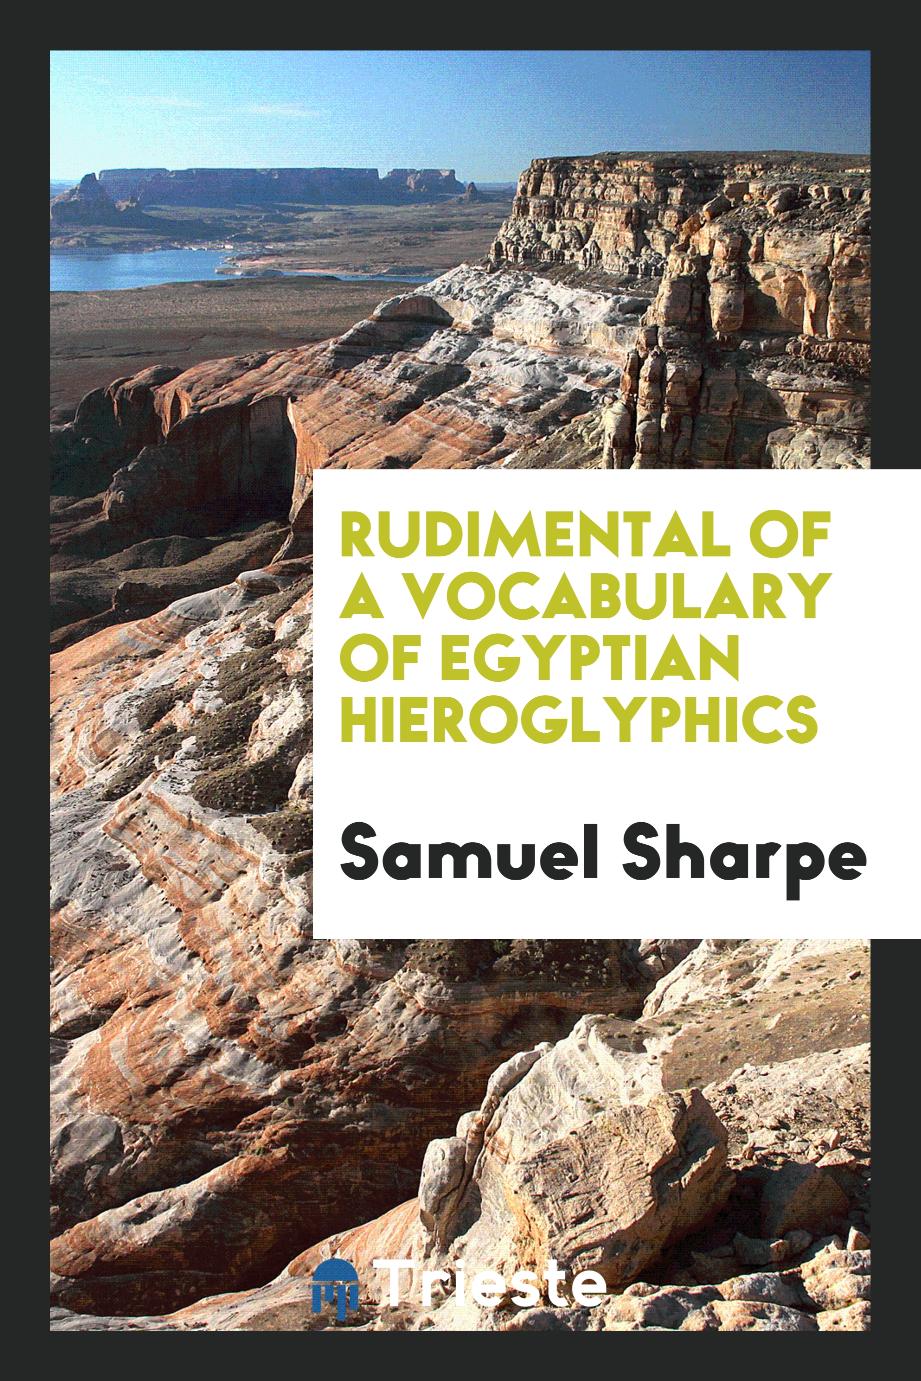 Rudimental of a Vocabulary of Egyptian Hieroglyphics